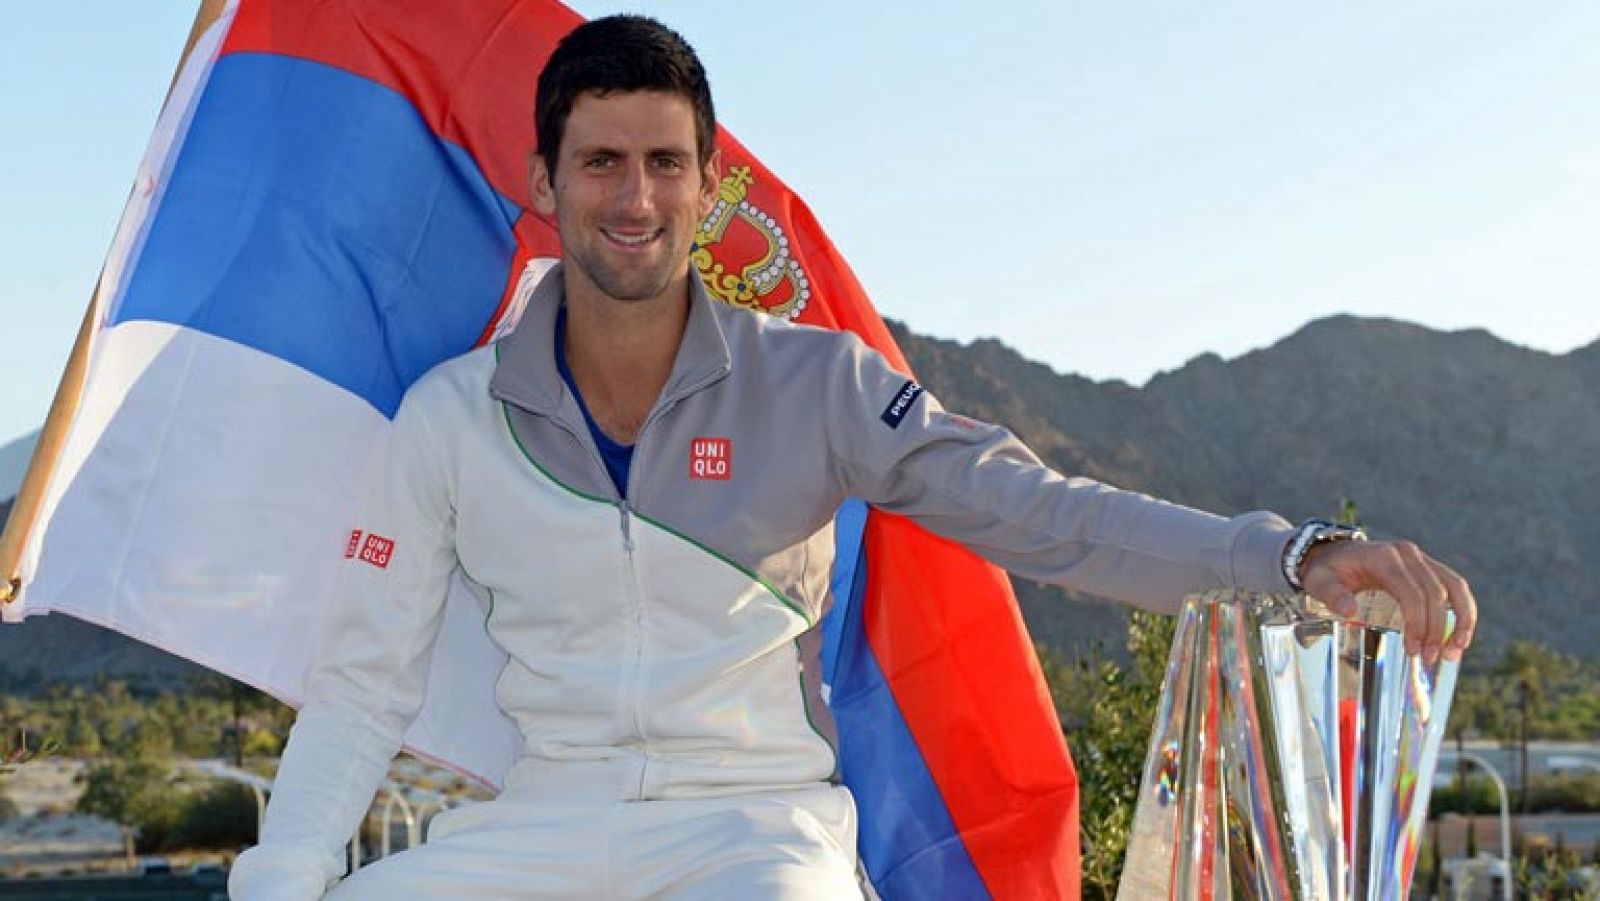 Telediario 1: Djokovic recorta distancias con Nadal tras ganar Indian Wells | RTVE Play